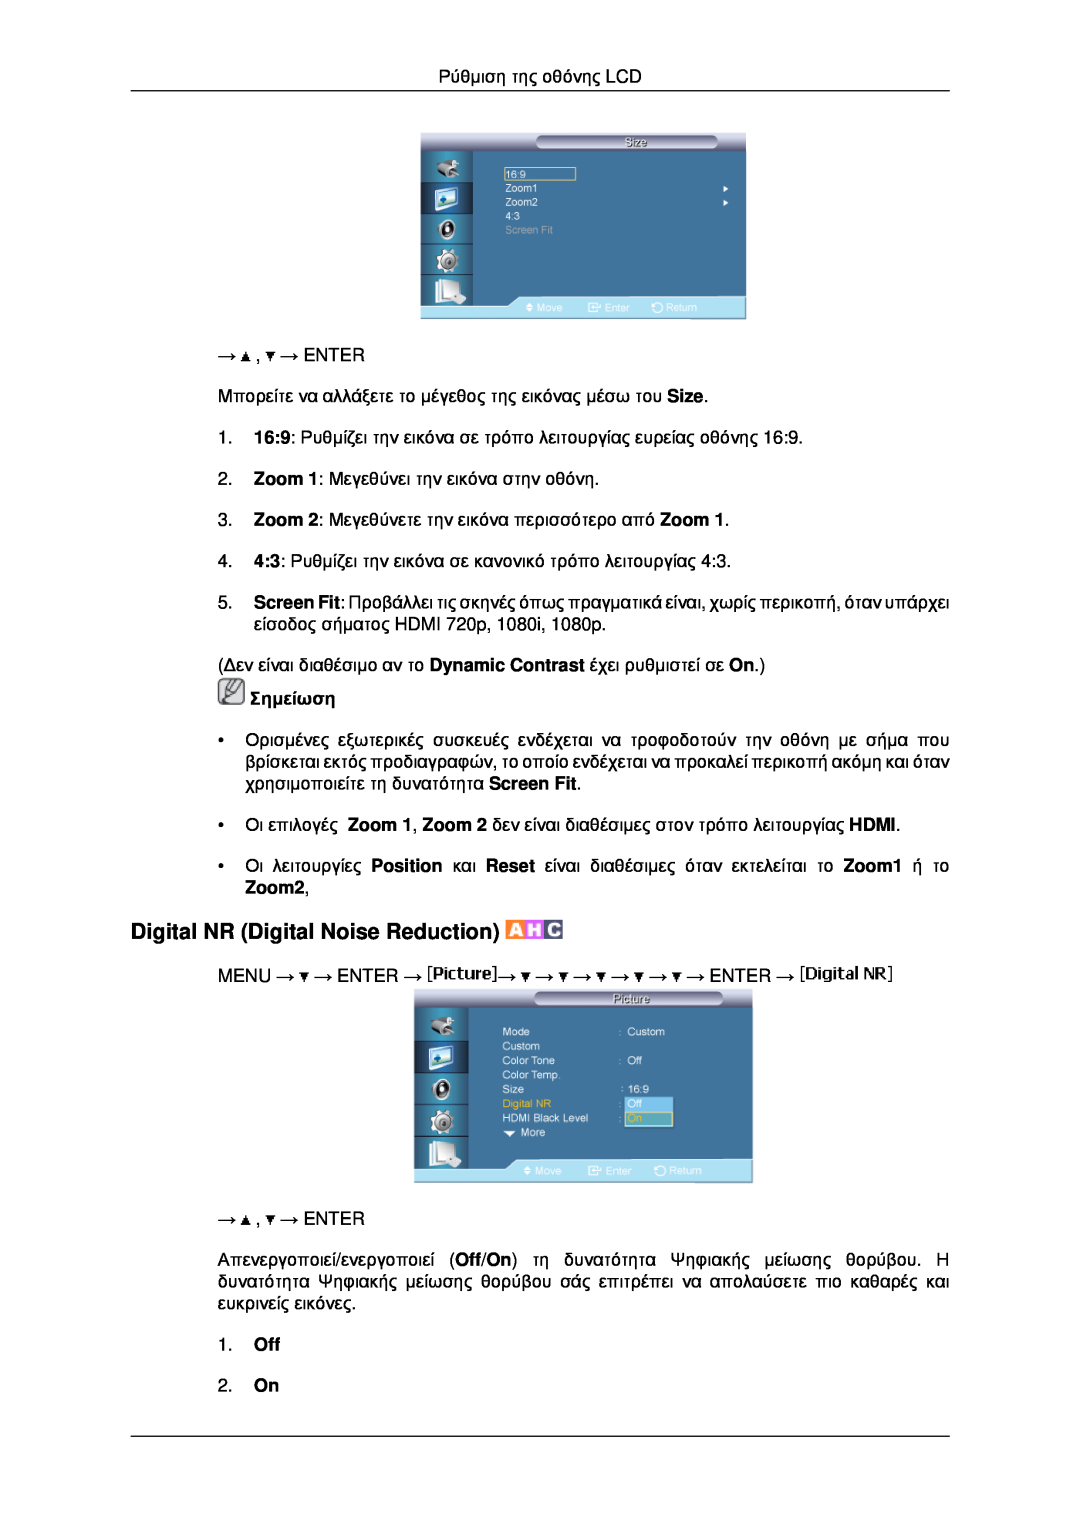 Samsung LH40MRTLBC/EN, LH46MRPLBF/EN, LH40MRPLBF/EN manual Digital NR Digital Noise Reduction, Zoom2, Σημείωση, Off 2. On 